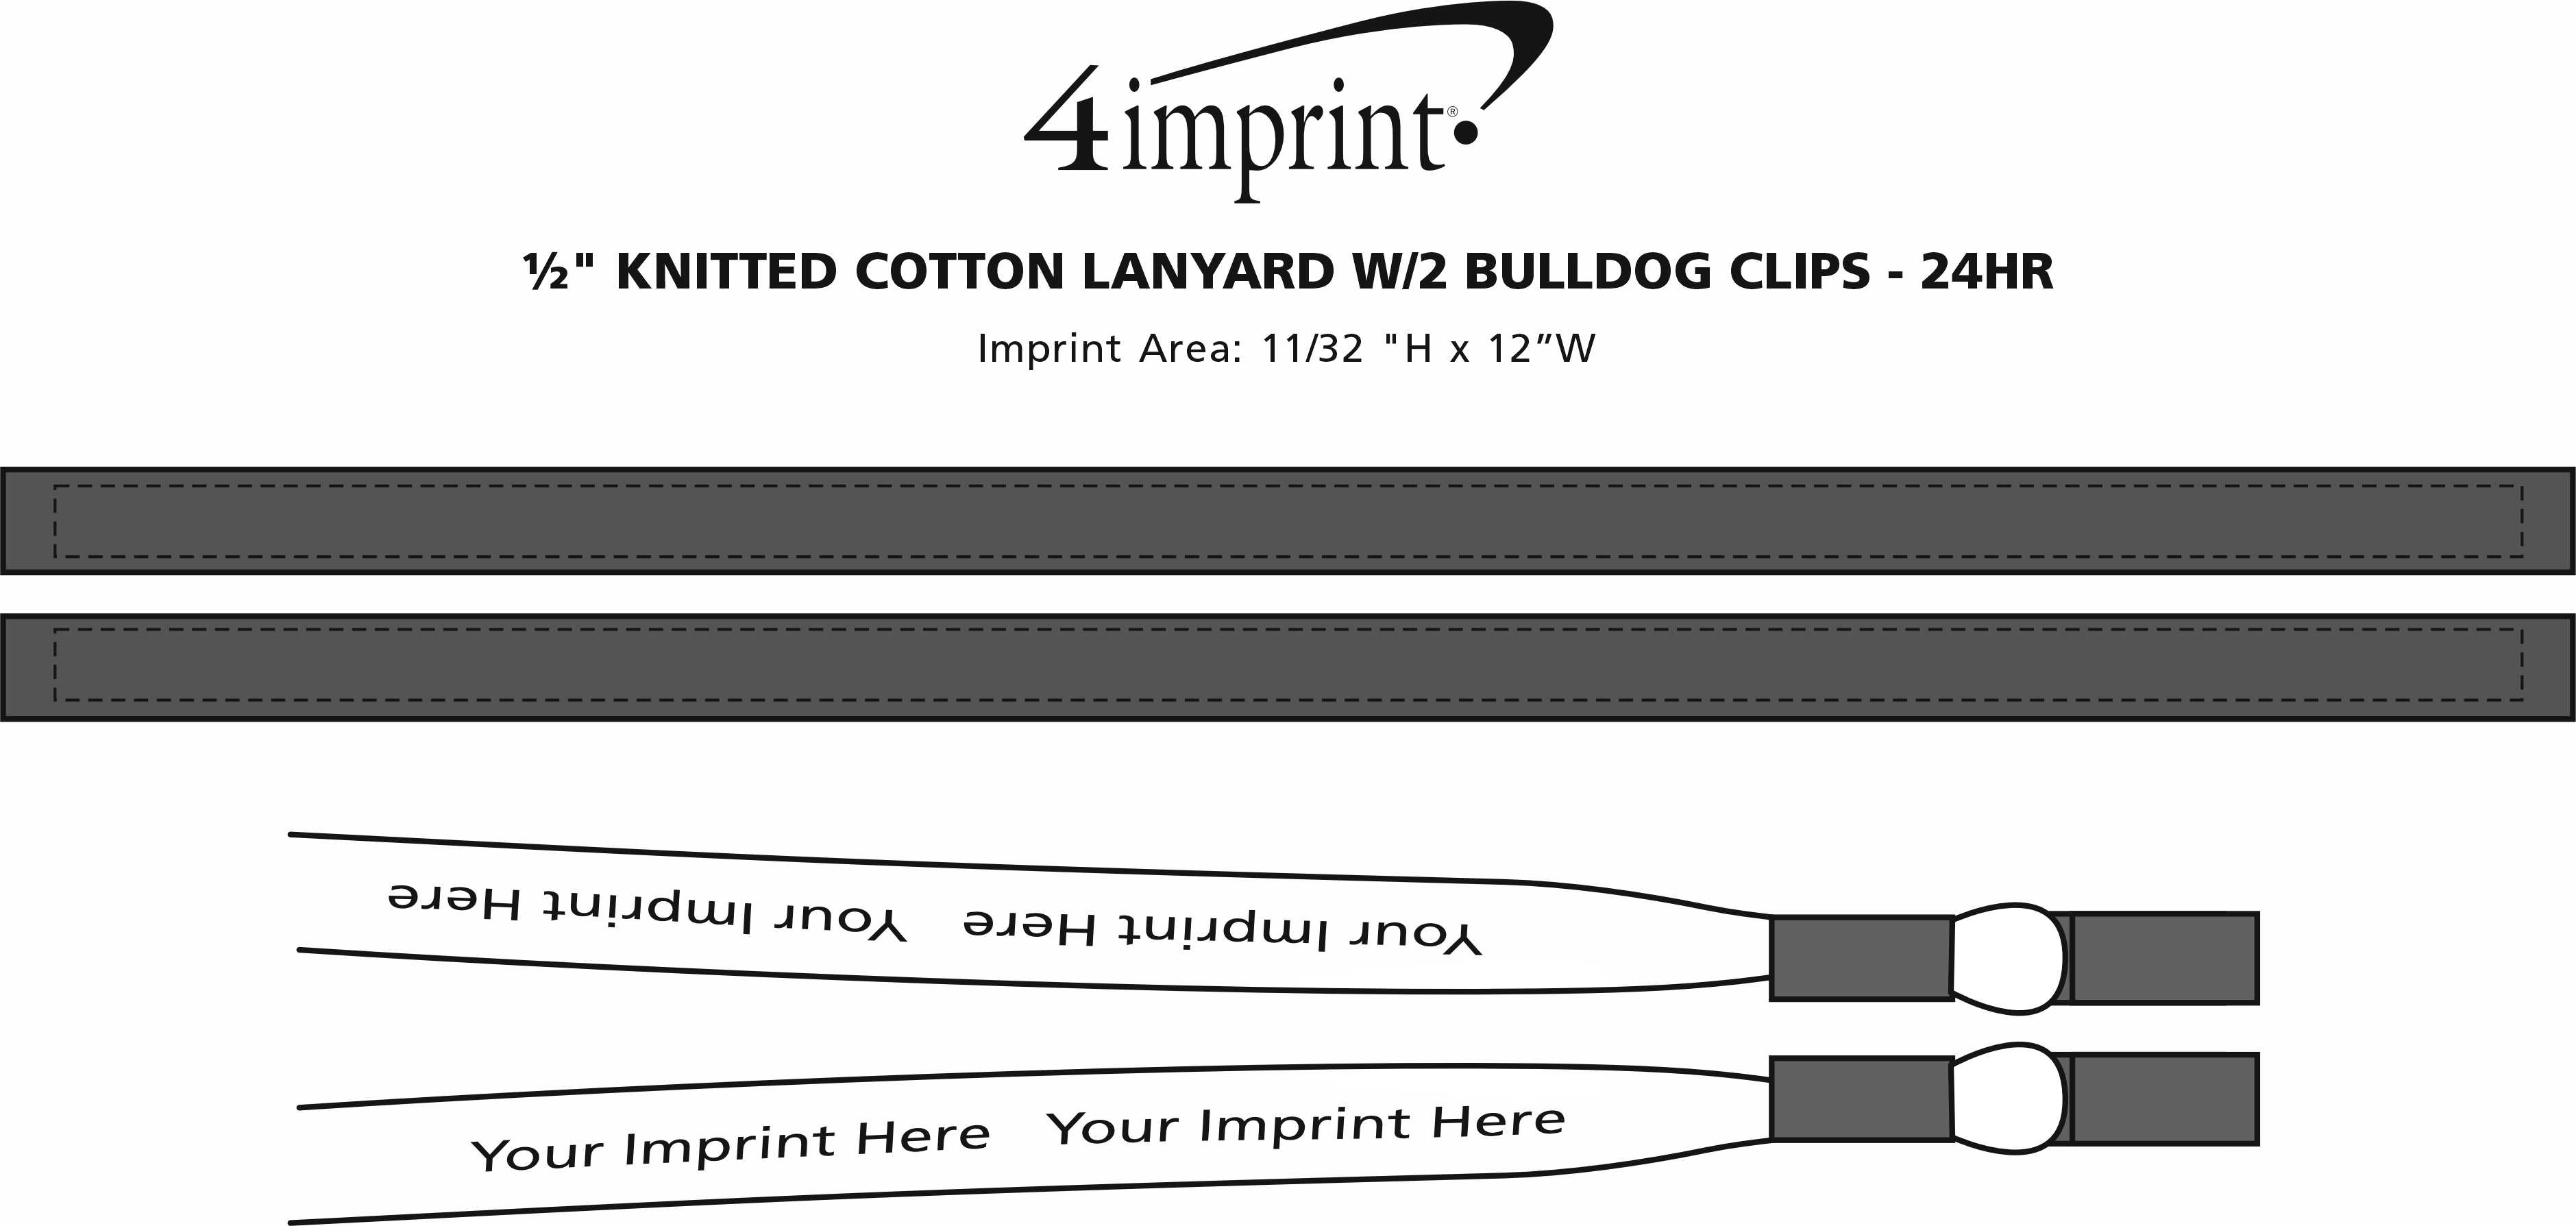 Imprint Area of Knit Cotton Lanyard - 5/8" - 2 Bulldog Clips - 24 hr